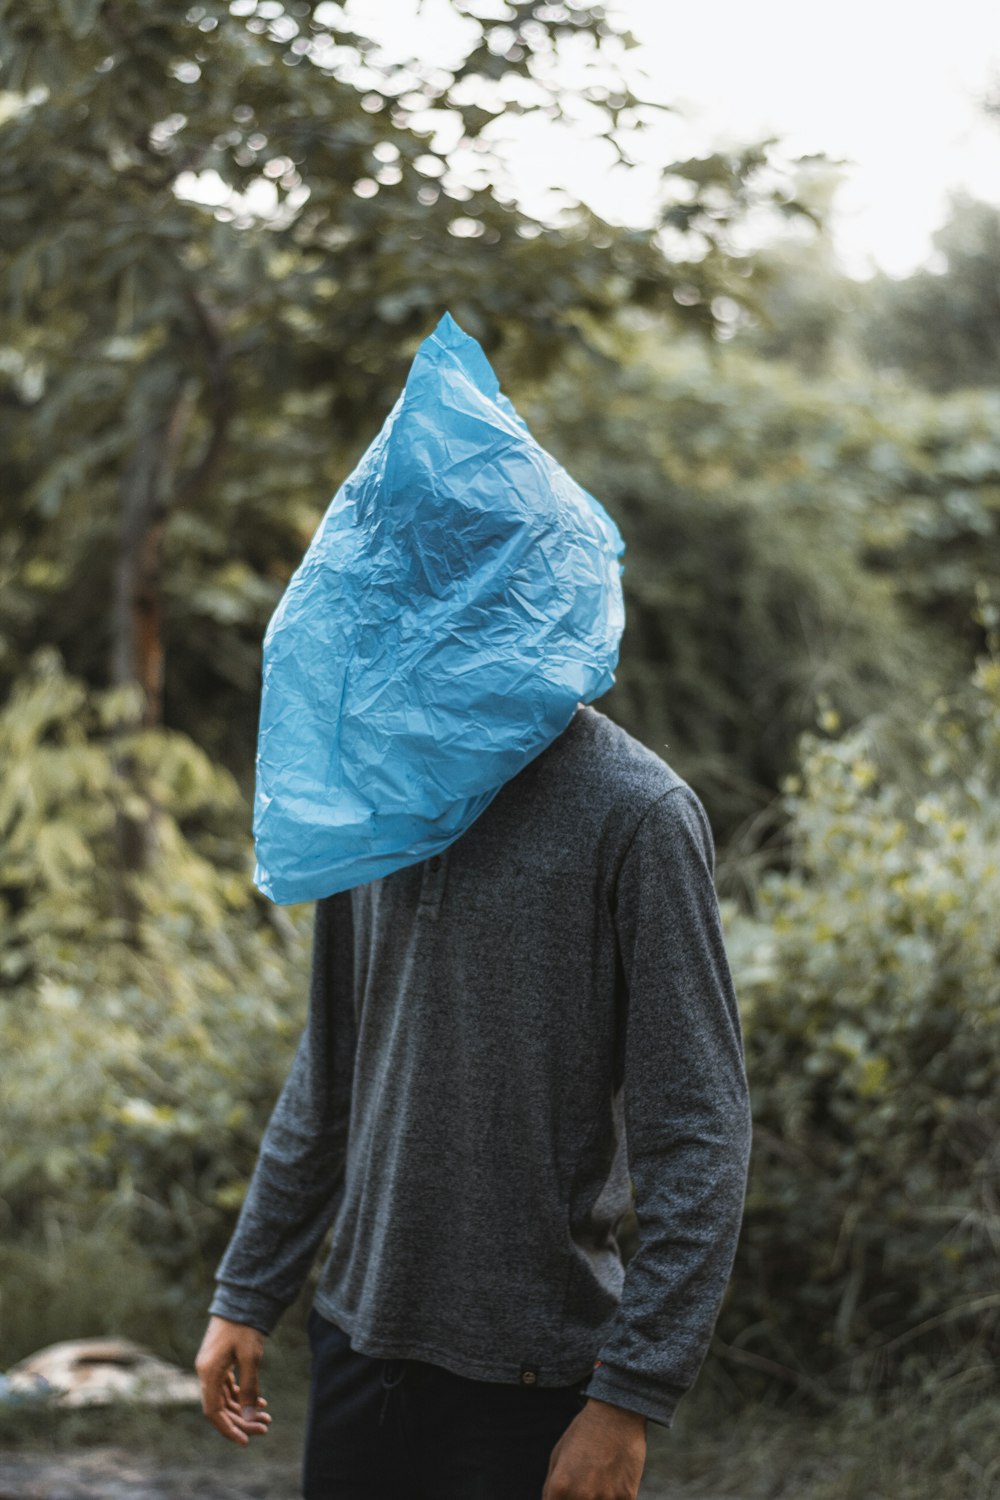 person in blue plastic bag